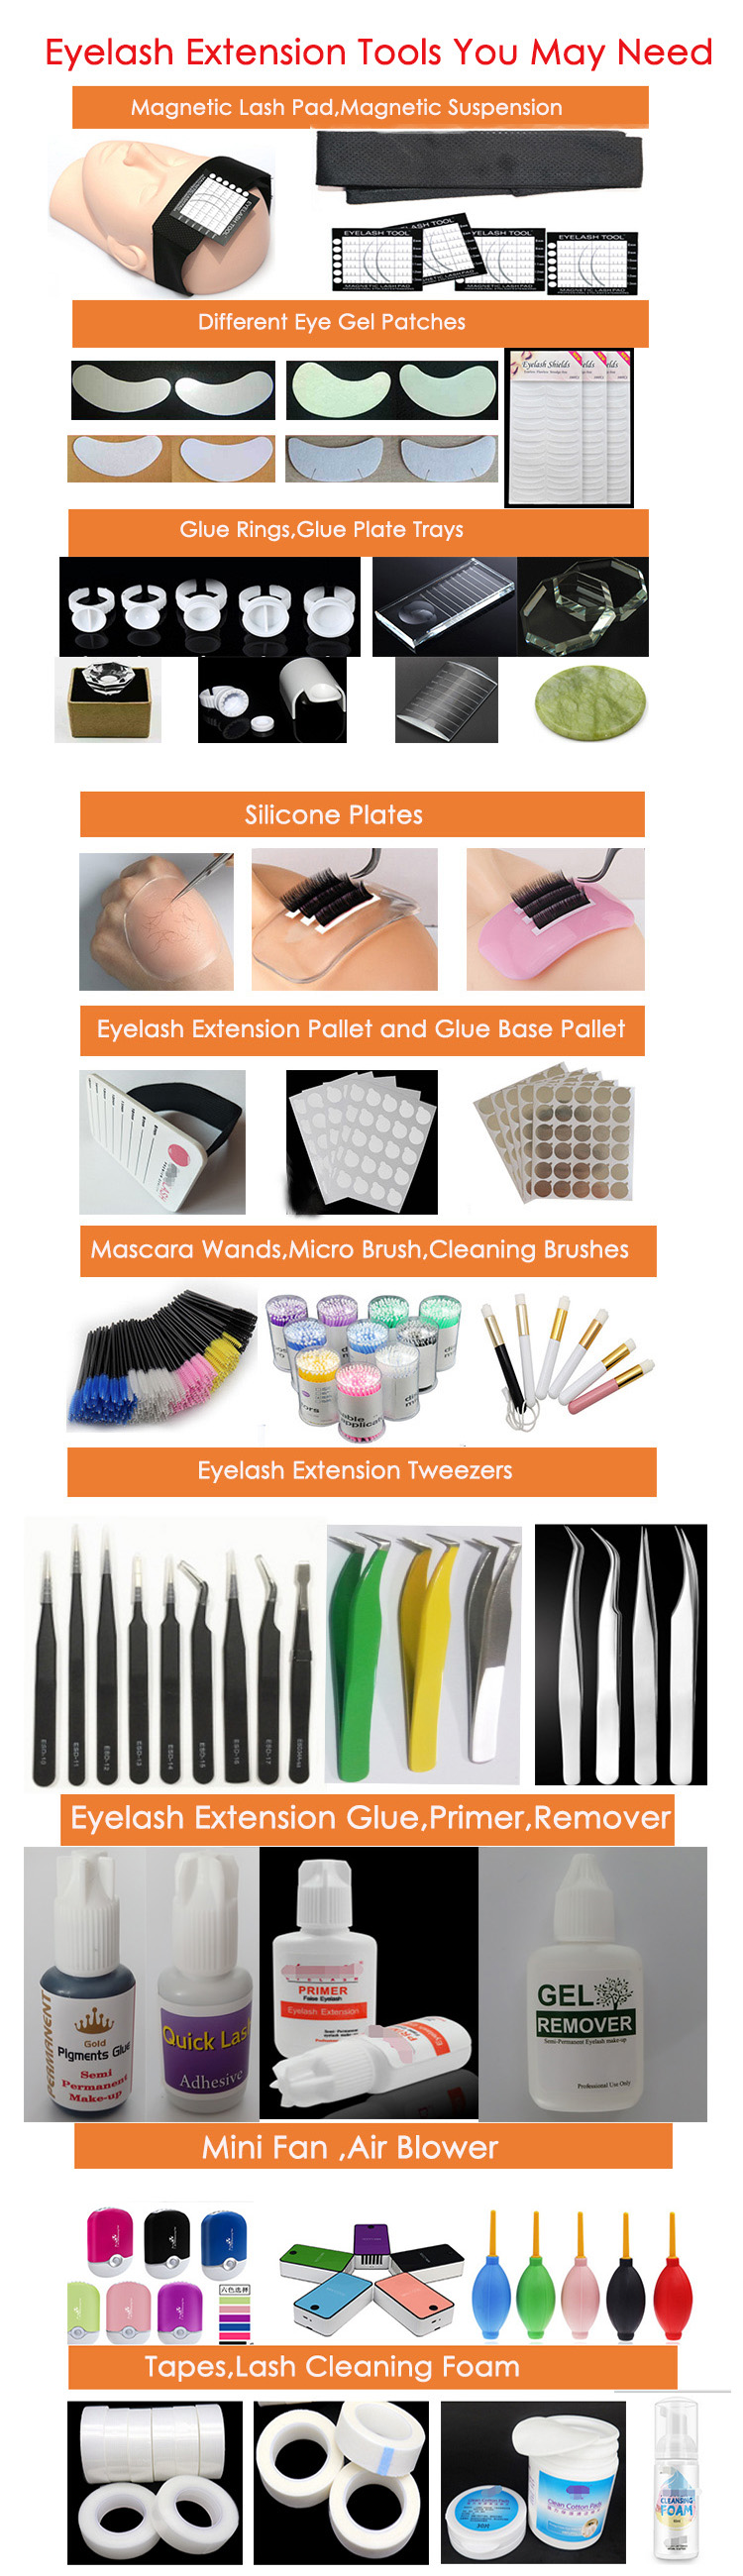 eyelash extension products factory supply China.jpg